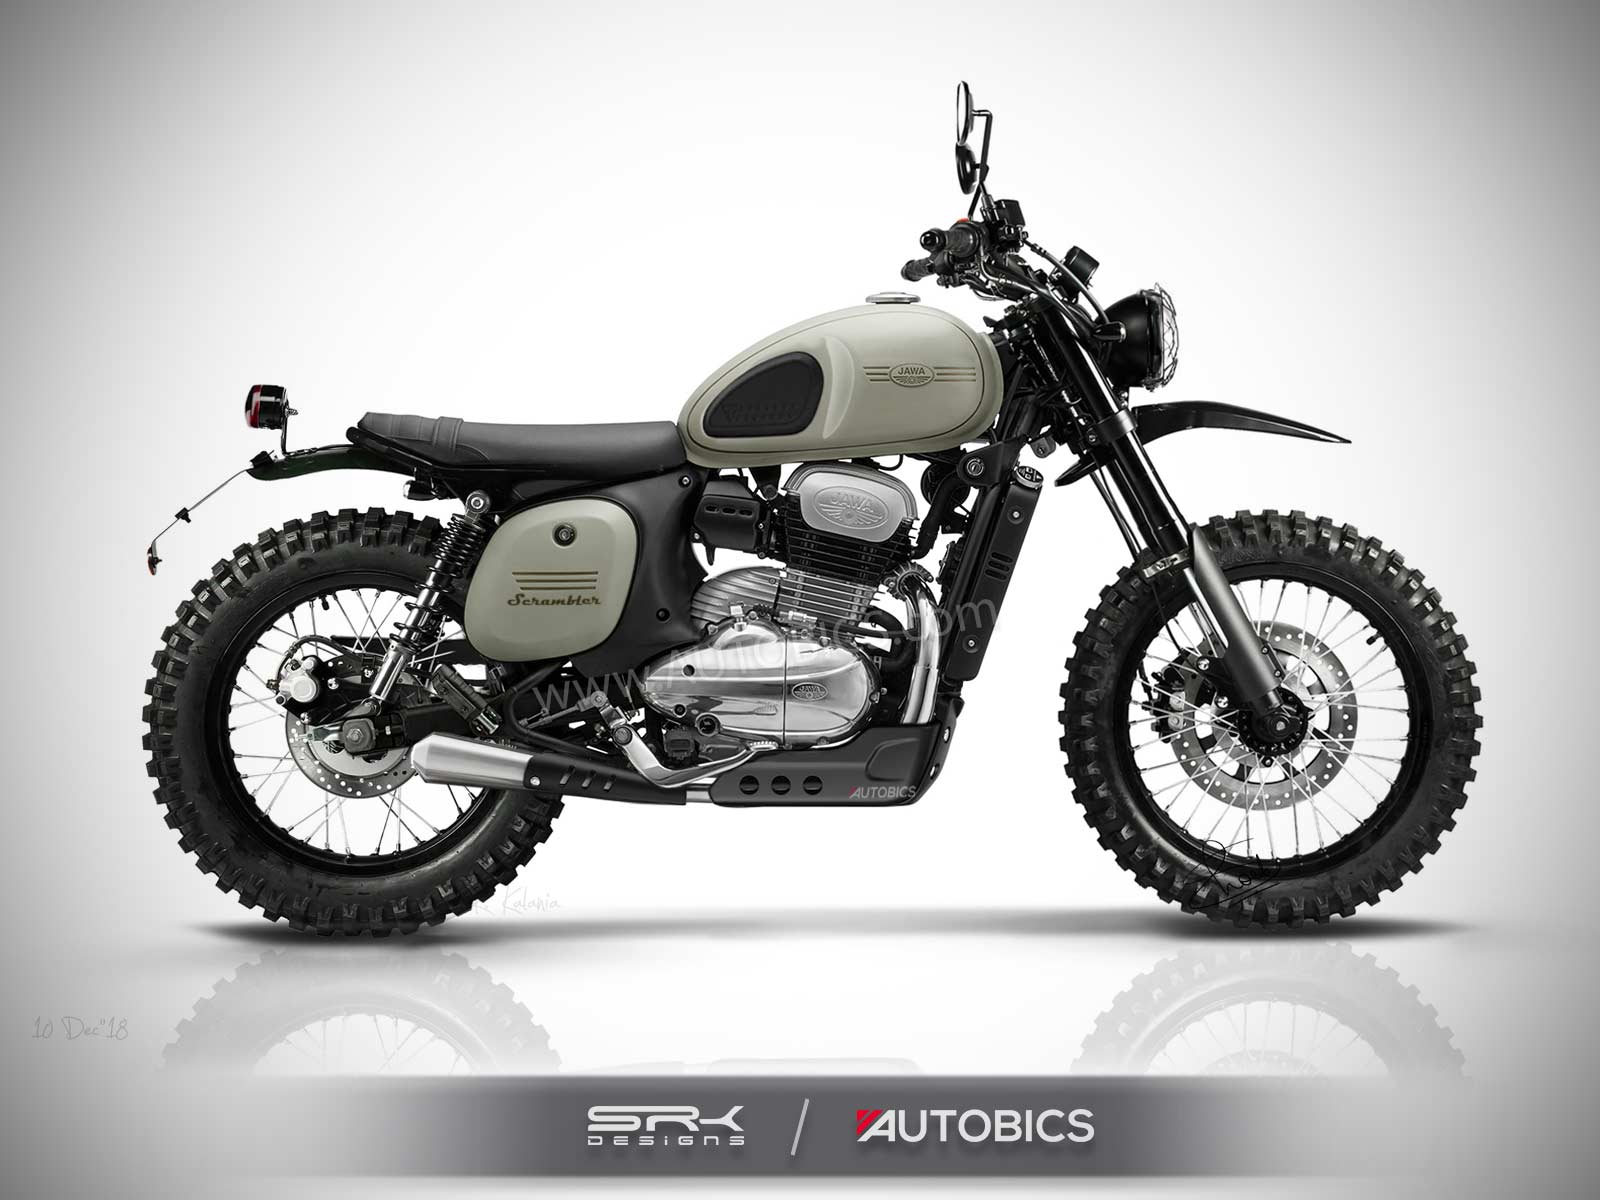 Jawa Scrambler Concept Motorcycle Imagined - Jawa 42 Scrambler Price In India , HD Wallpaper & Backgrounds